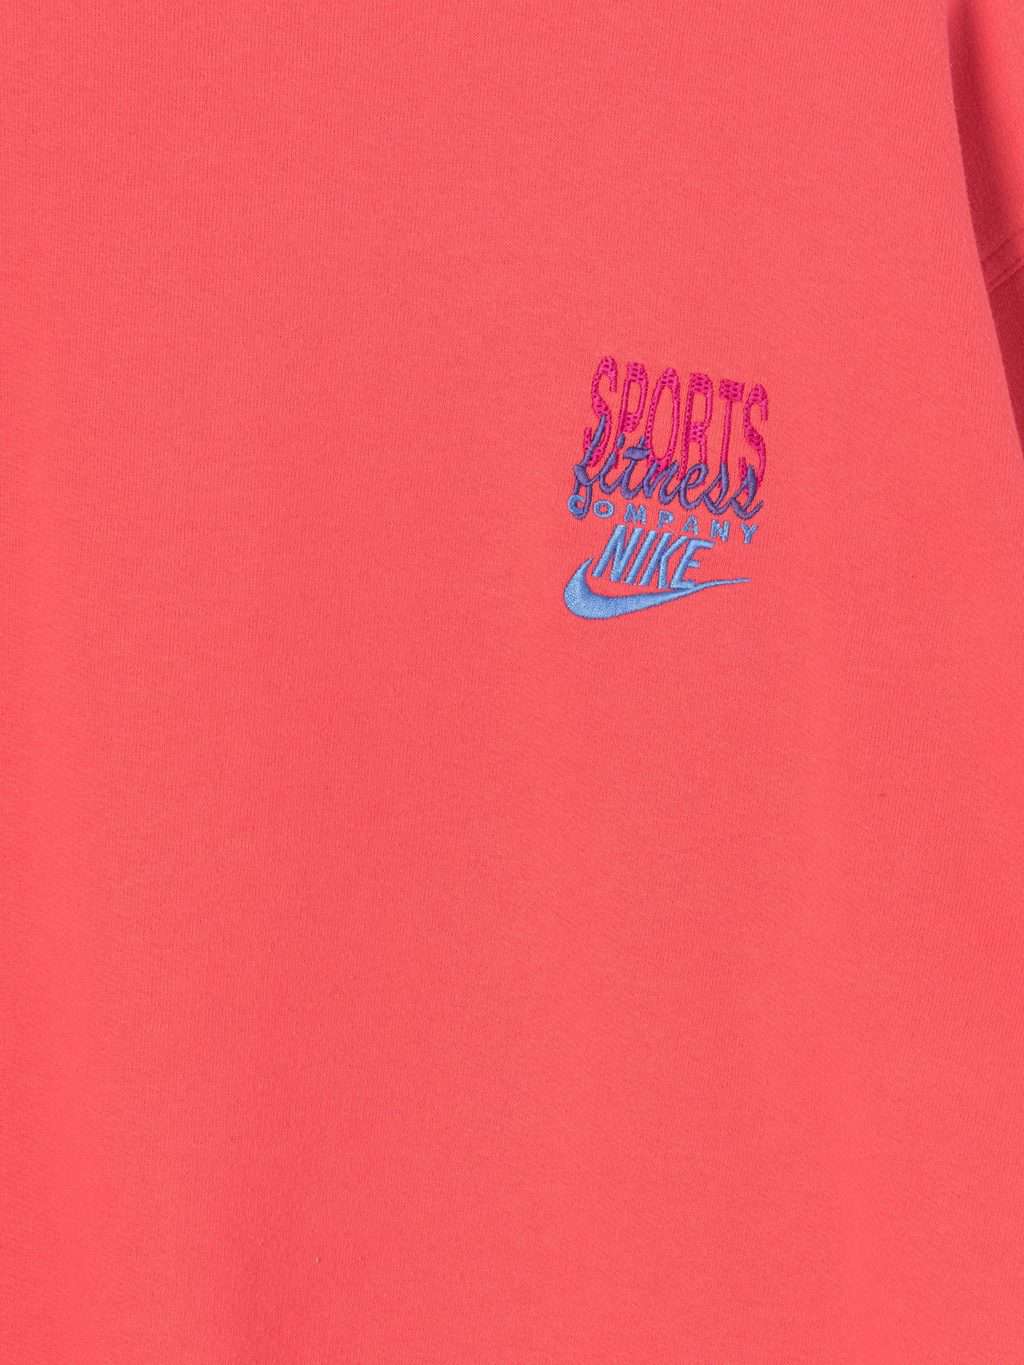 Vintage 90s womens Nike sweatshirt pink short sleeve - Large - St Cyr ...